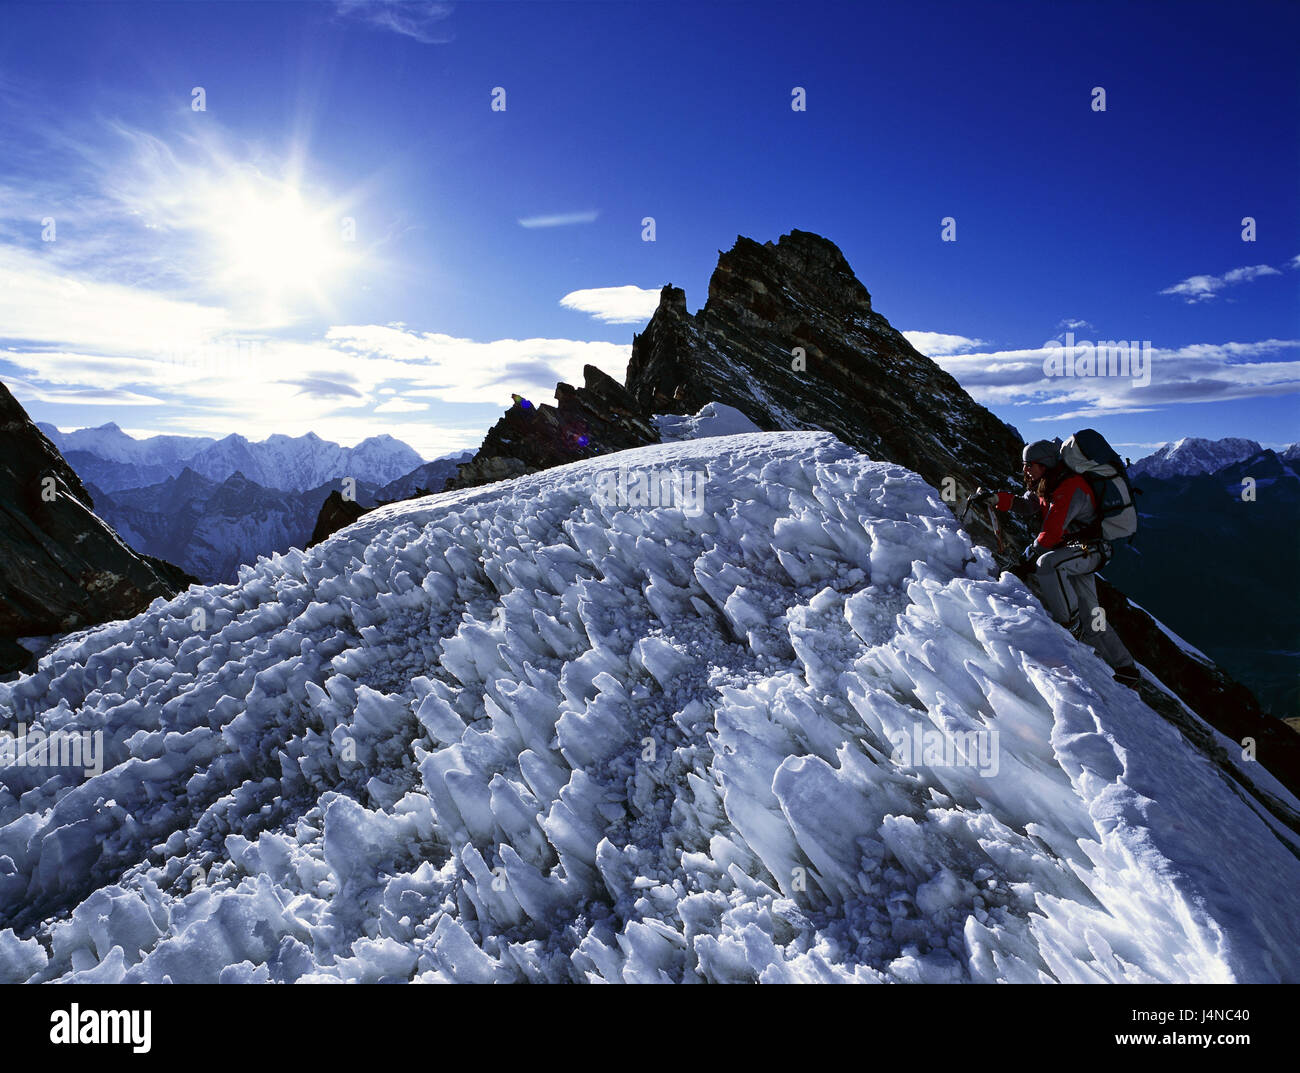 Nepal, Cholatse, Berge, Bergsteiger, Aufstieg, Schnee, Eis, Sonne, Bergpanorama Stockfoto